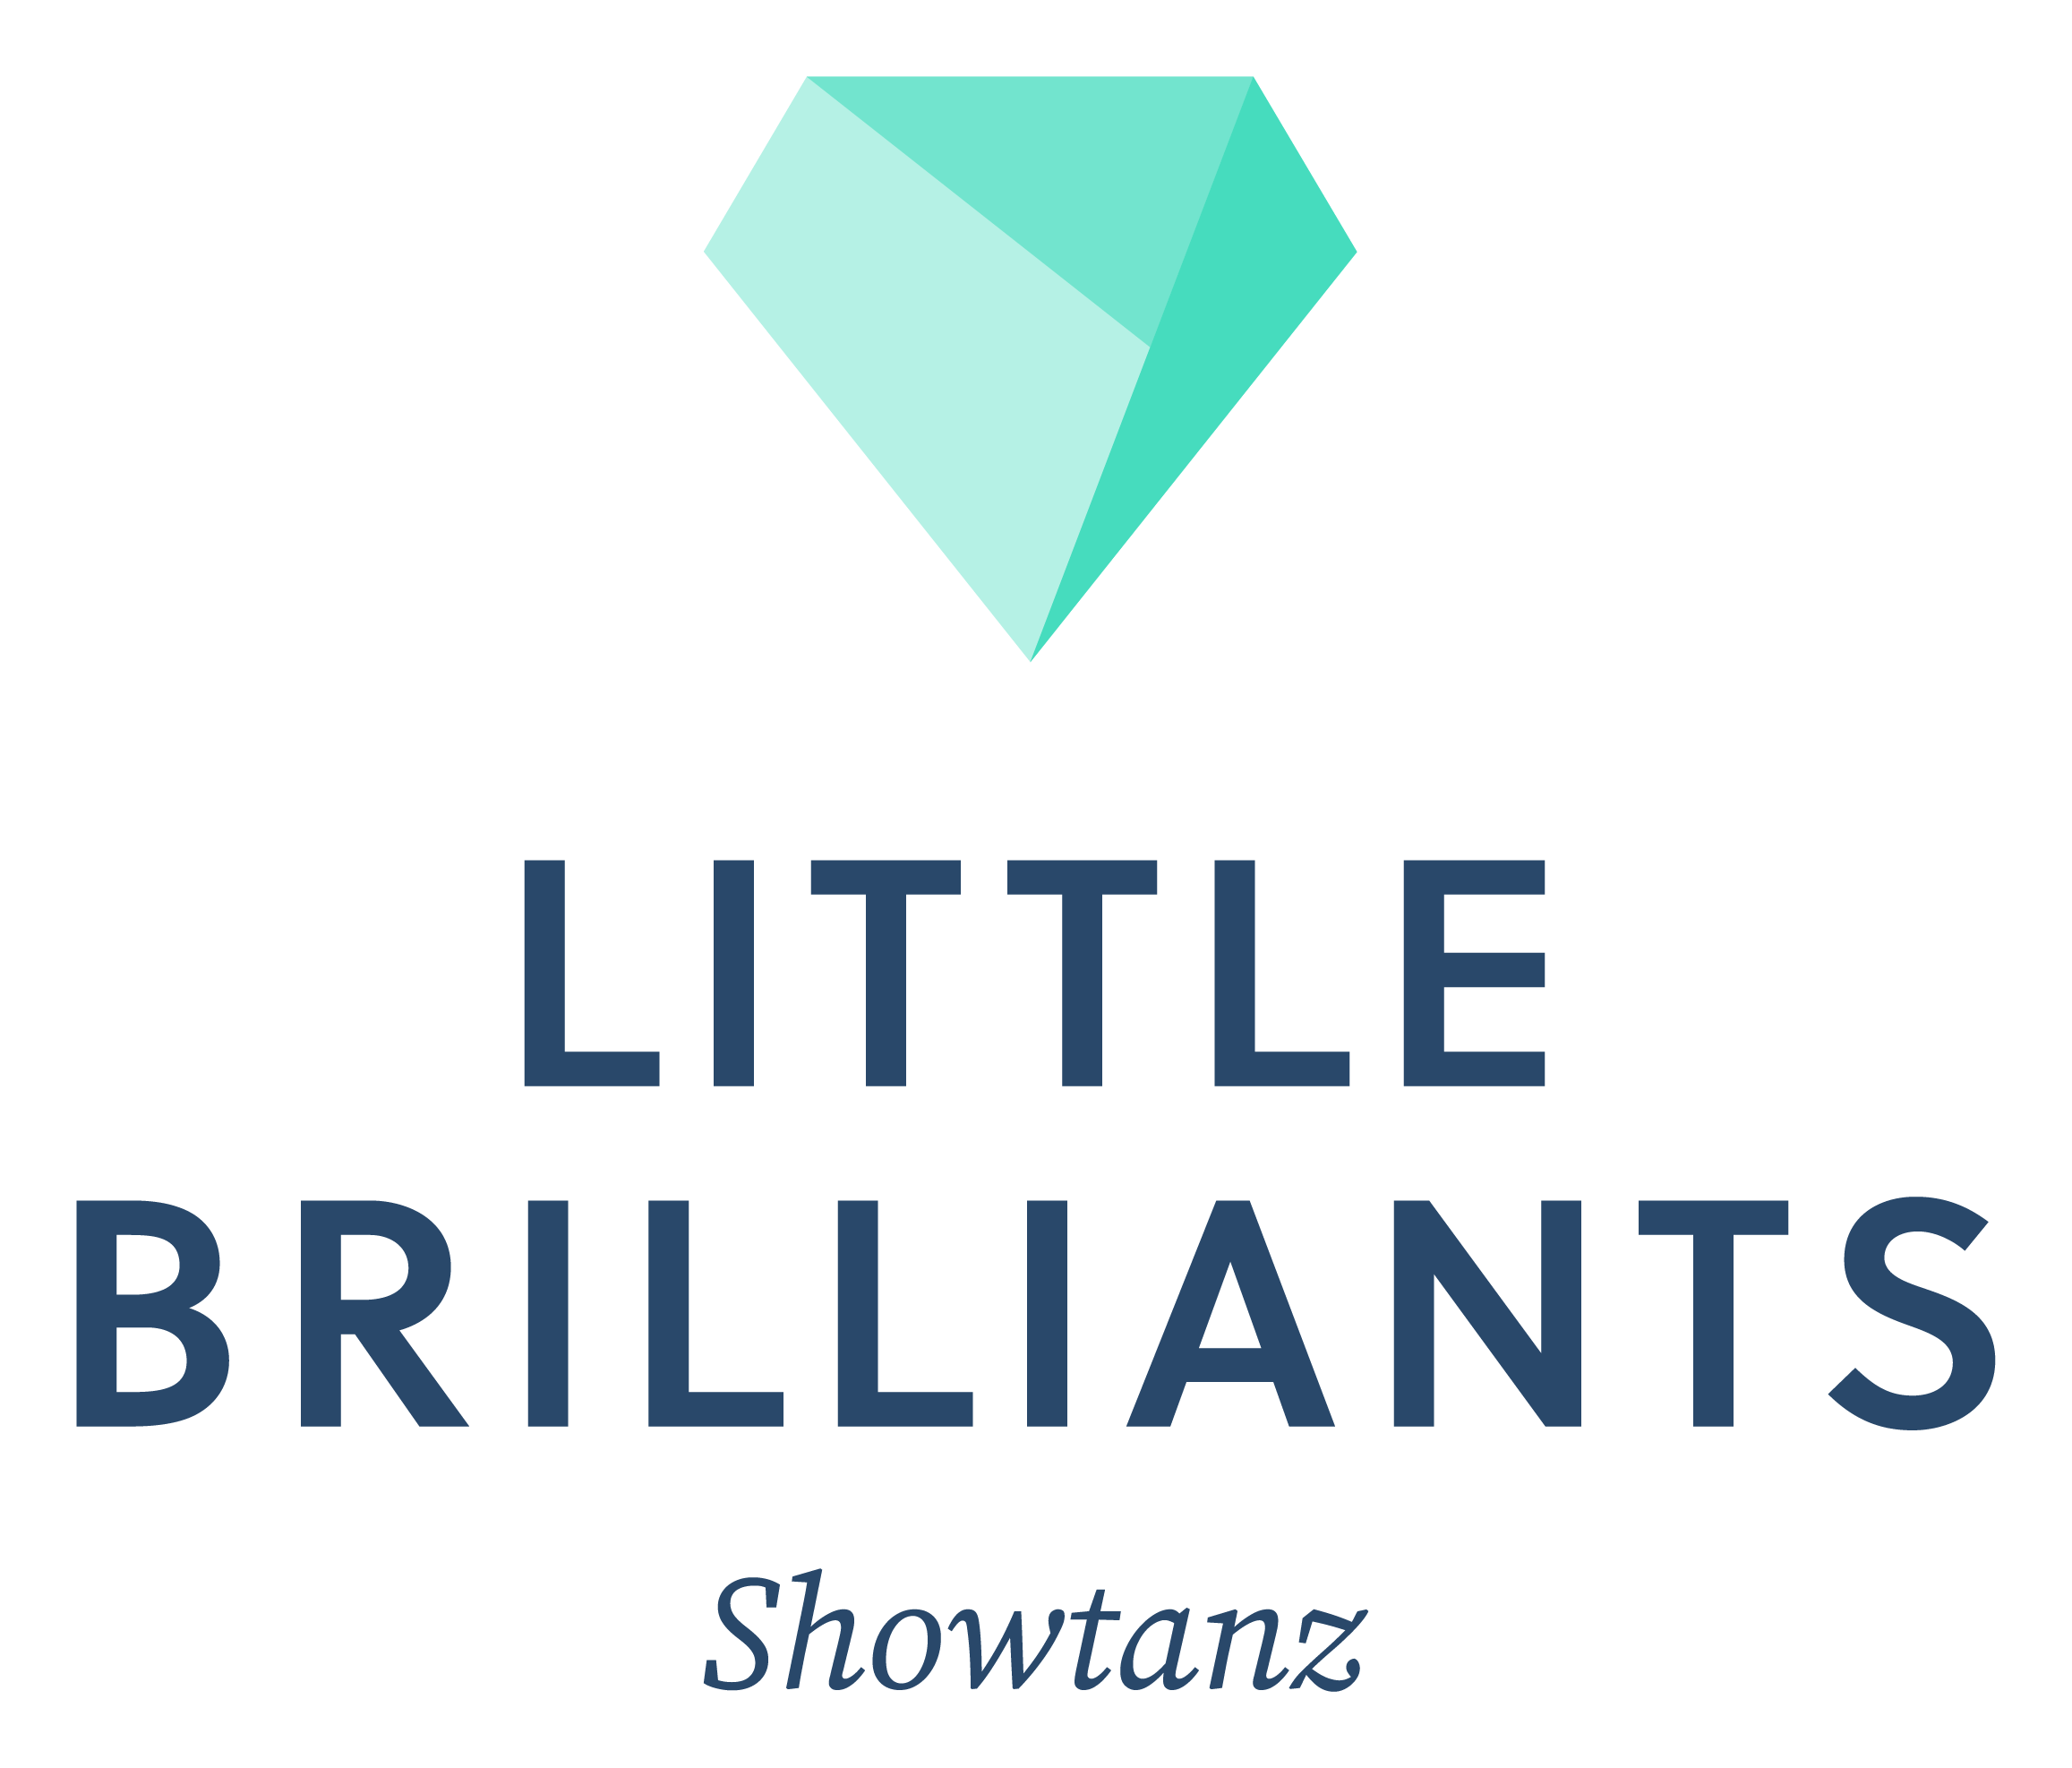 littlebrilliants logo rgb